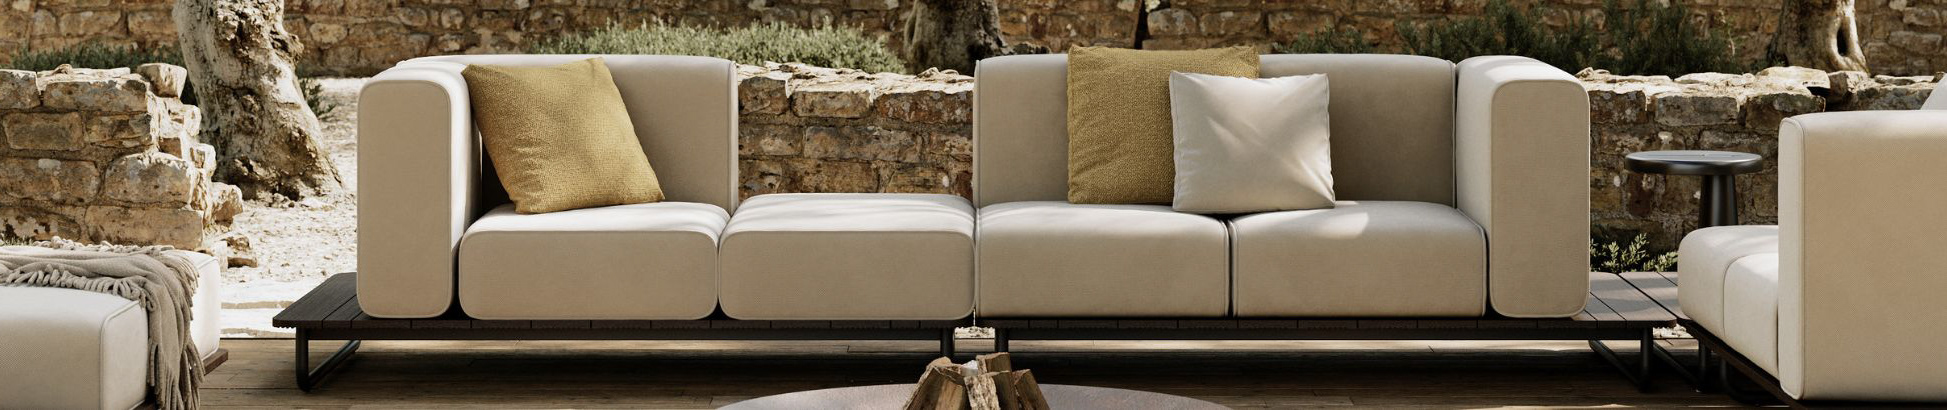 Domkapa | Upholstered Furniture's profile banner